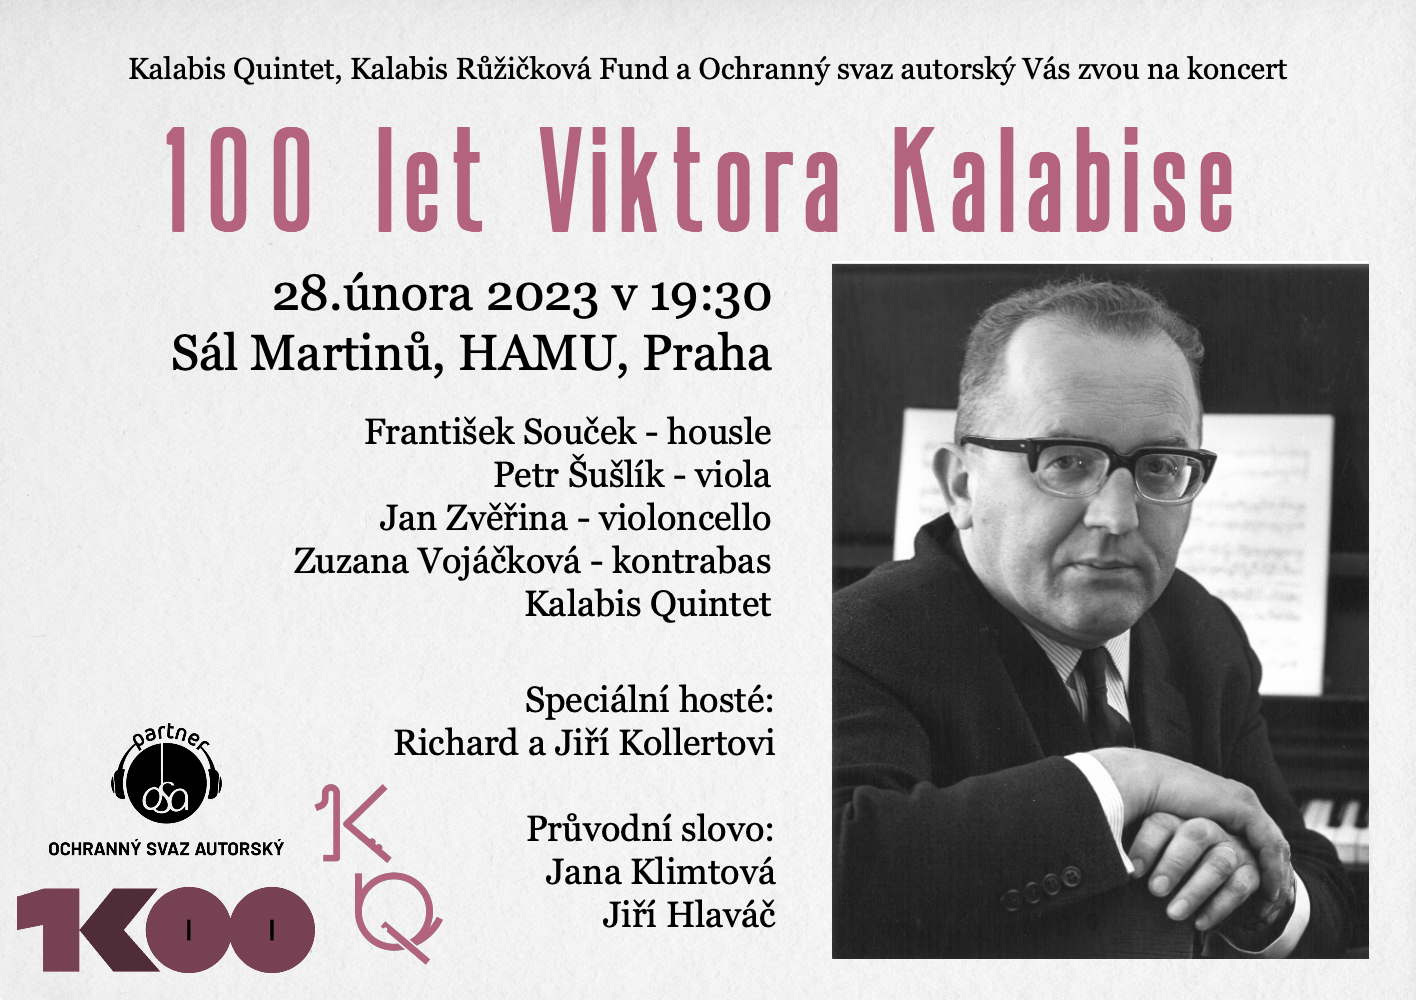 100 let Viktora Kalabise